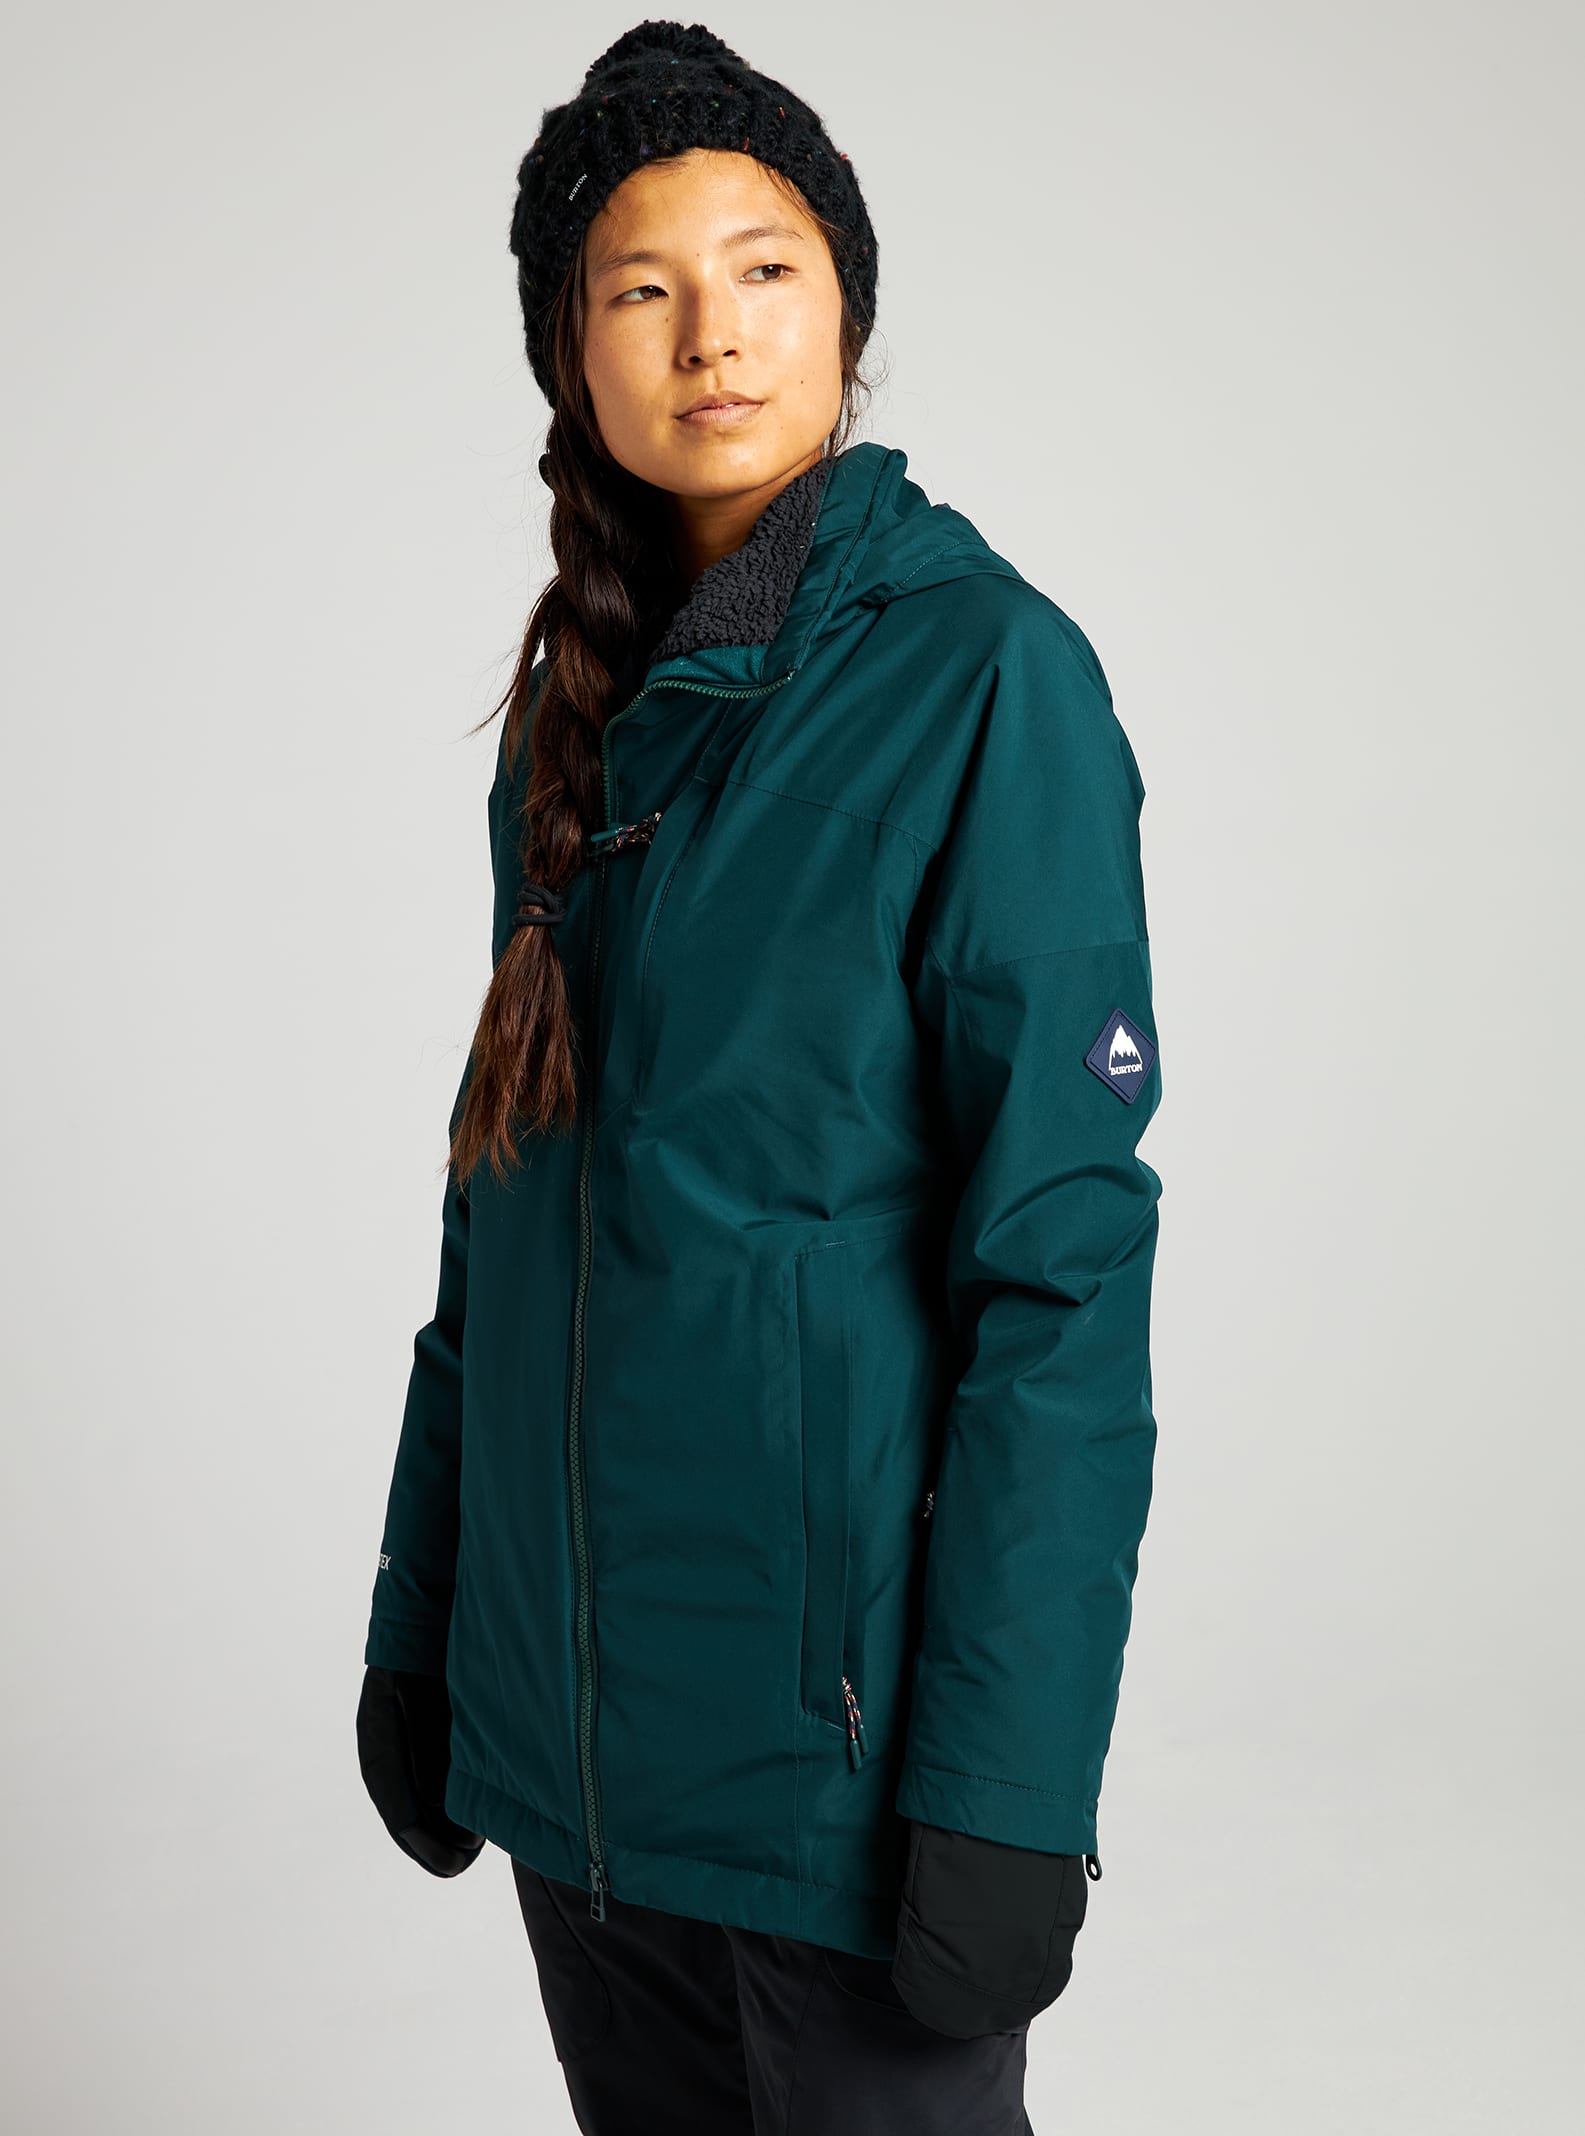 Women's Burton GORE-TEX Balsam Jacket | Burton.com Winter 2021 US